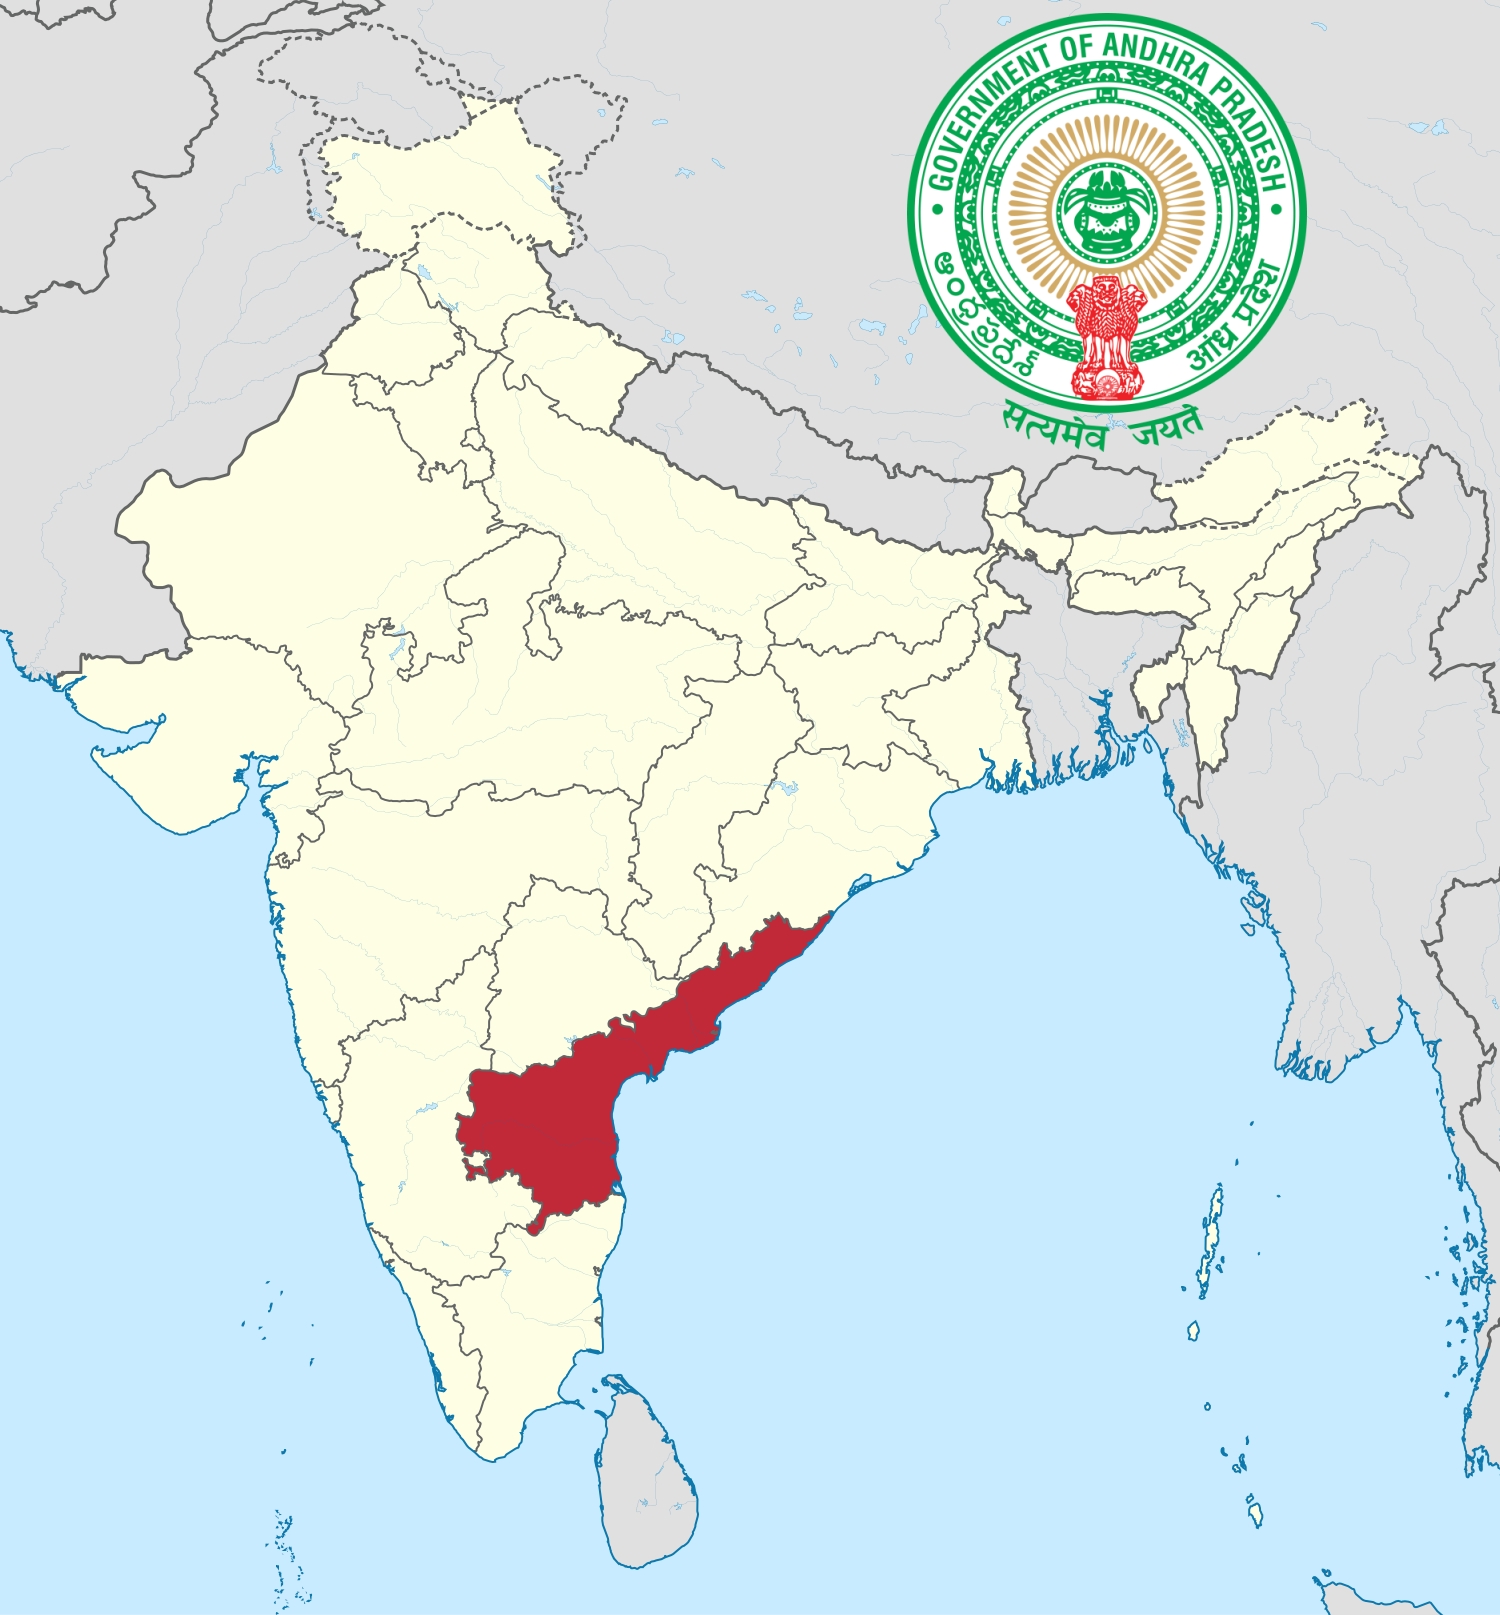 http://www.net4info.de/photos/cpg/albums/userpics/10001/Andhra_Pradesh.jpg